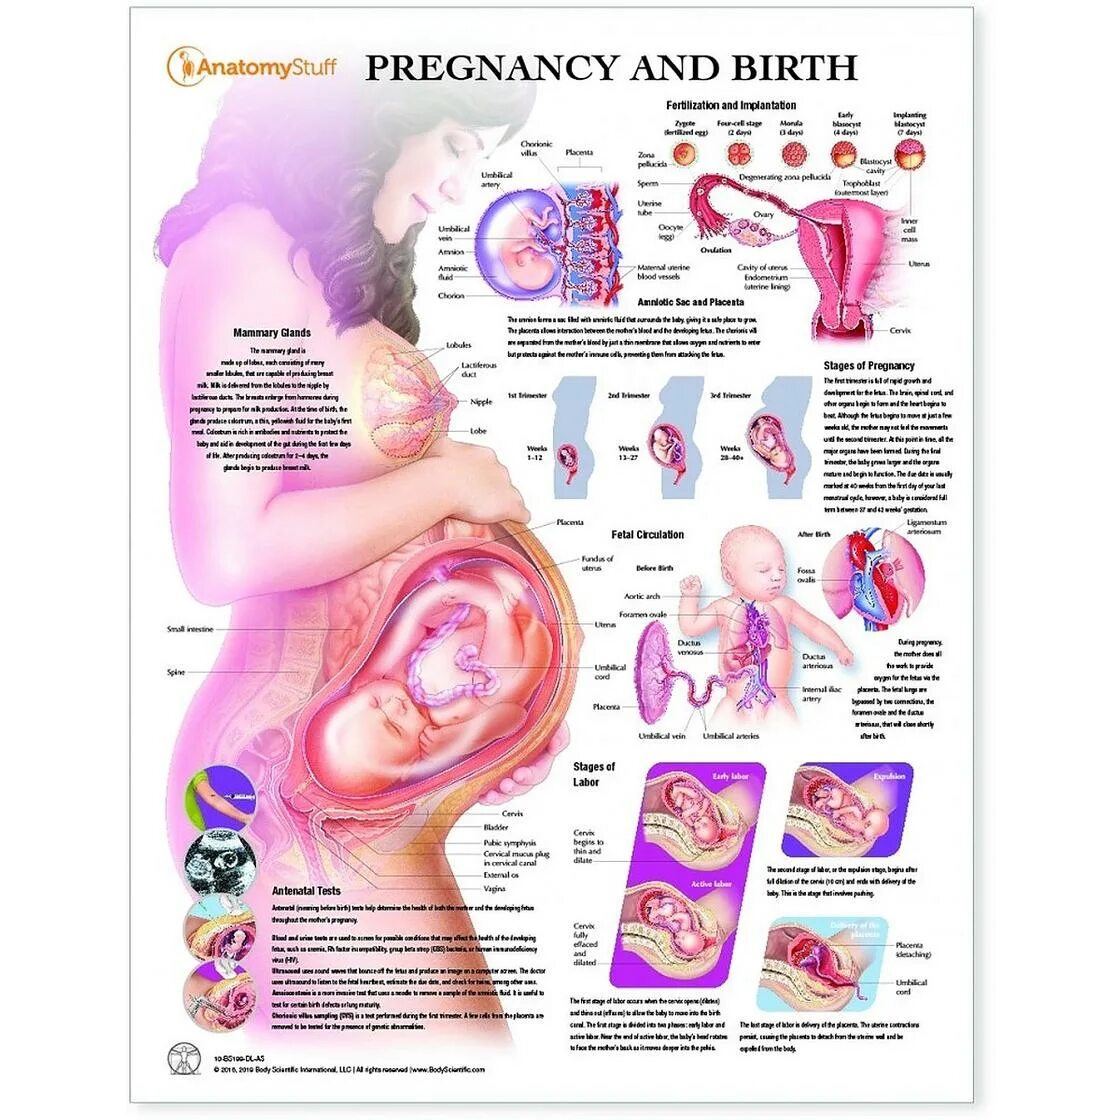 Матка на 33 неделе беременности. Положение ребенка в животе на 33 неделе беременности. Плод в животе матери схема. Положение органов на 32 неделе беременности. Эмбрион 34 недели беременности вес плода.